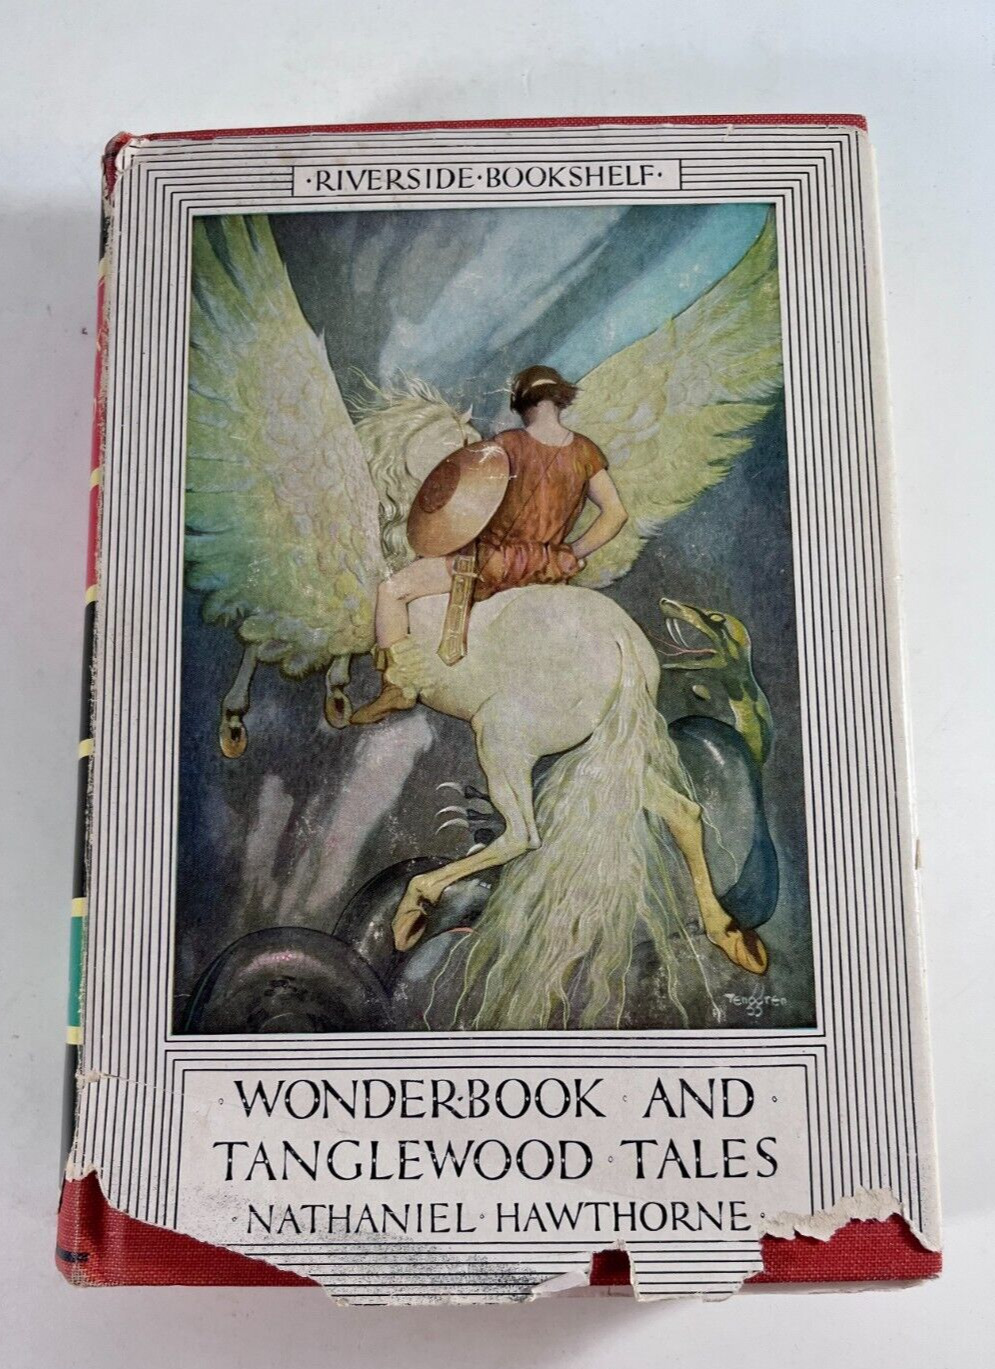 Wonderbook and Tanglewood Tales Nathaniel Hawthorne Riverside Bookshelf 1951